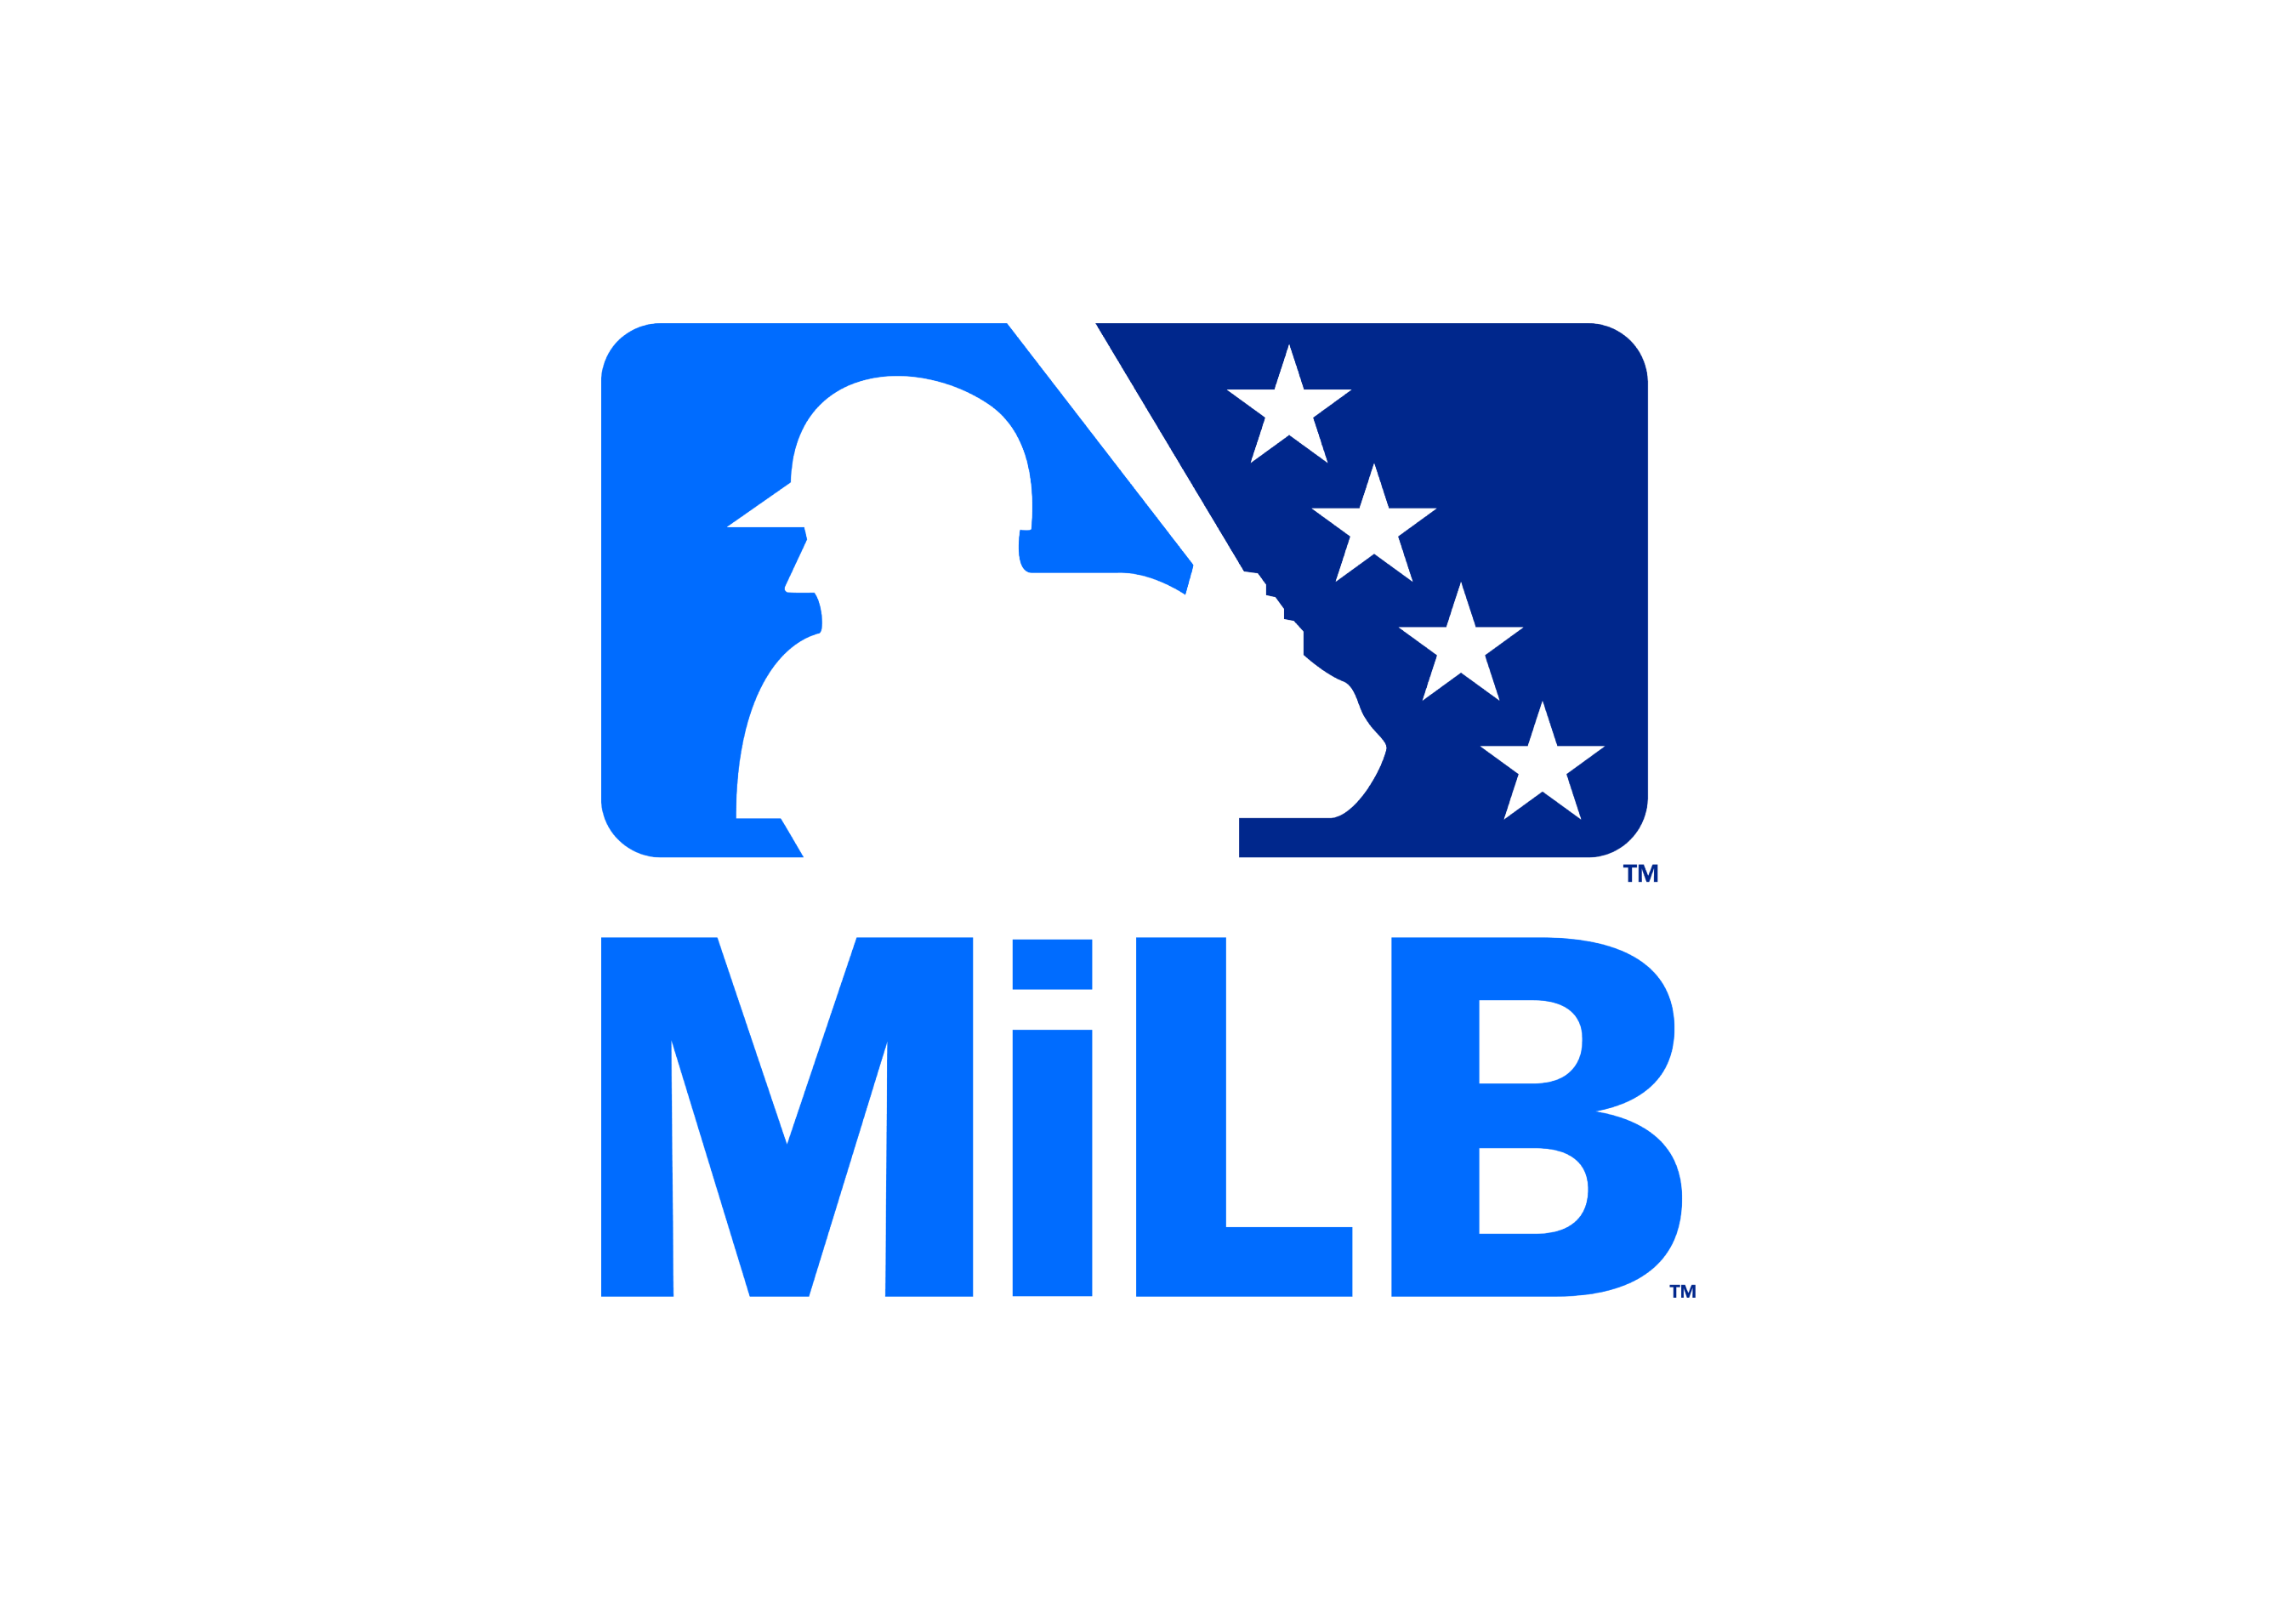 www.baseballamerica.com